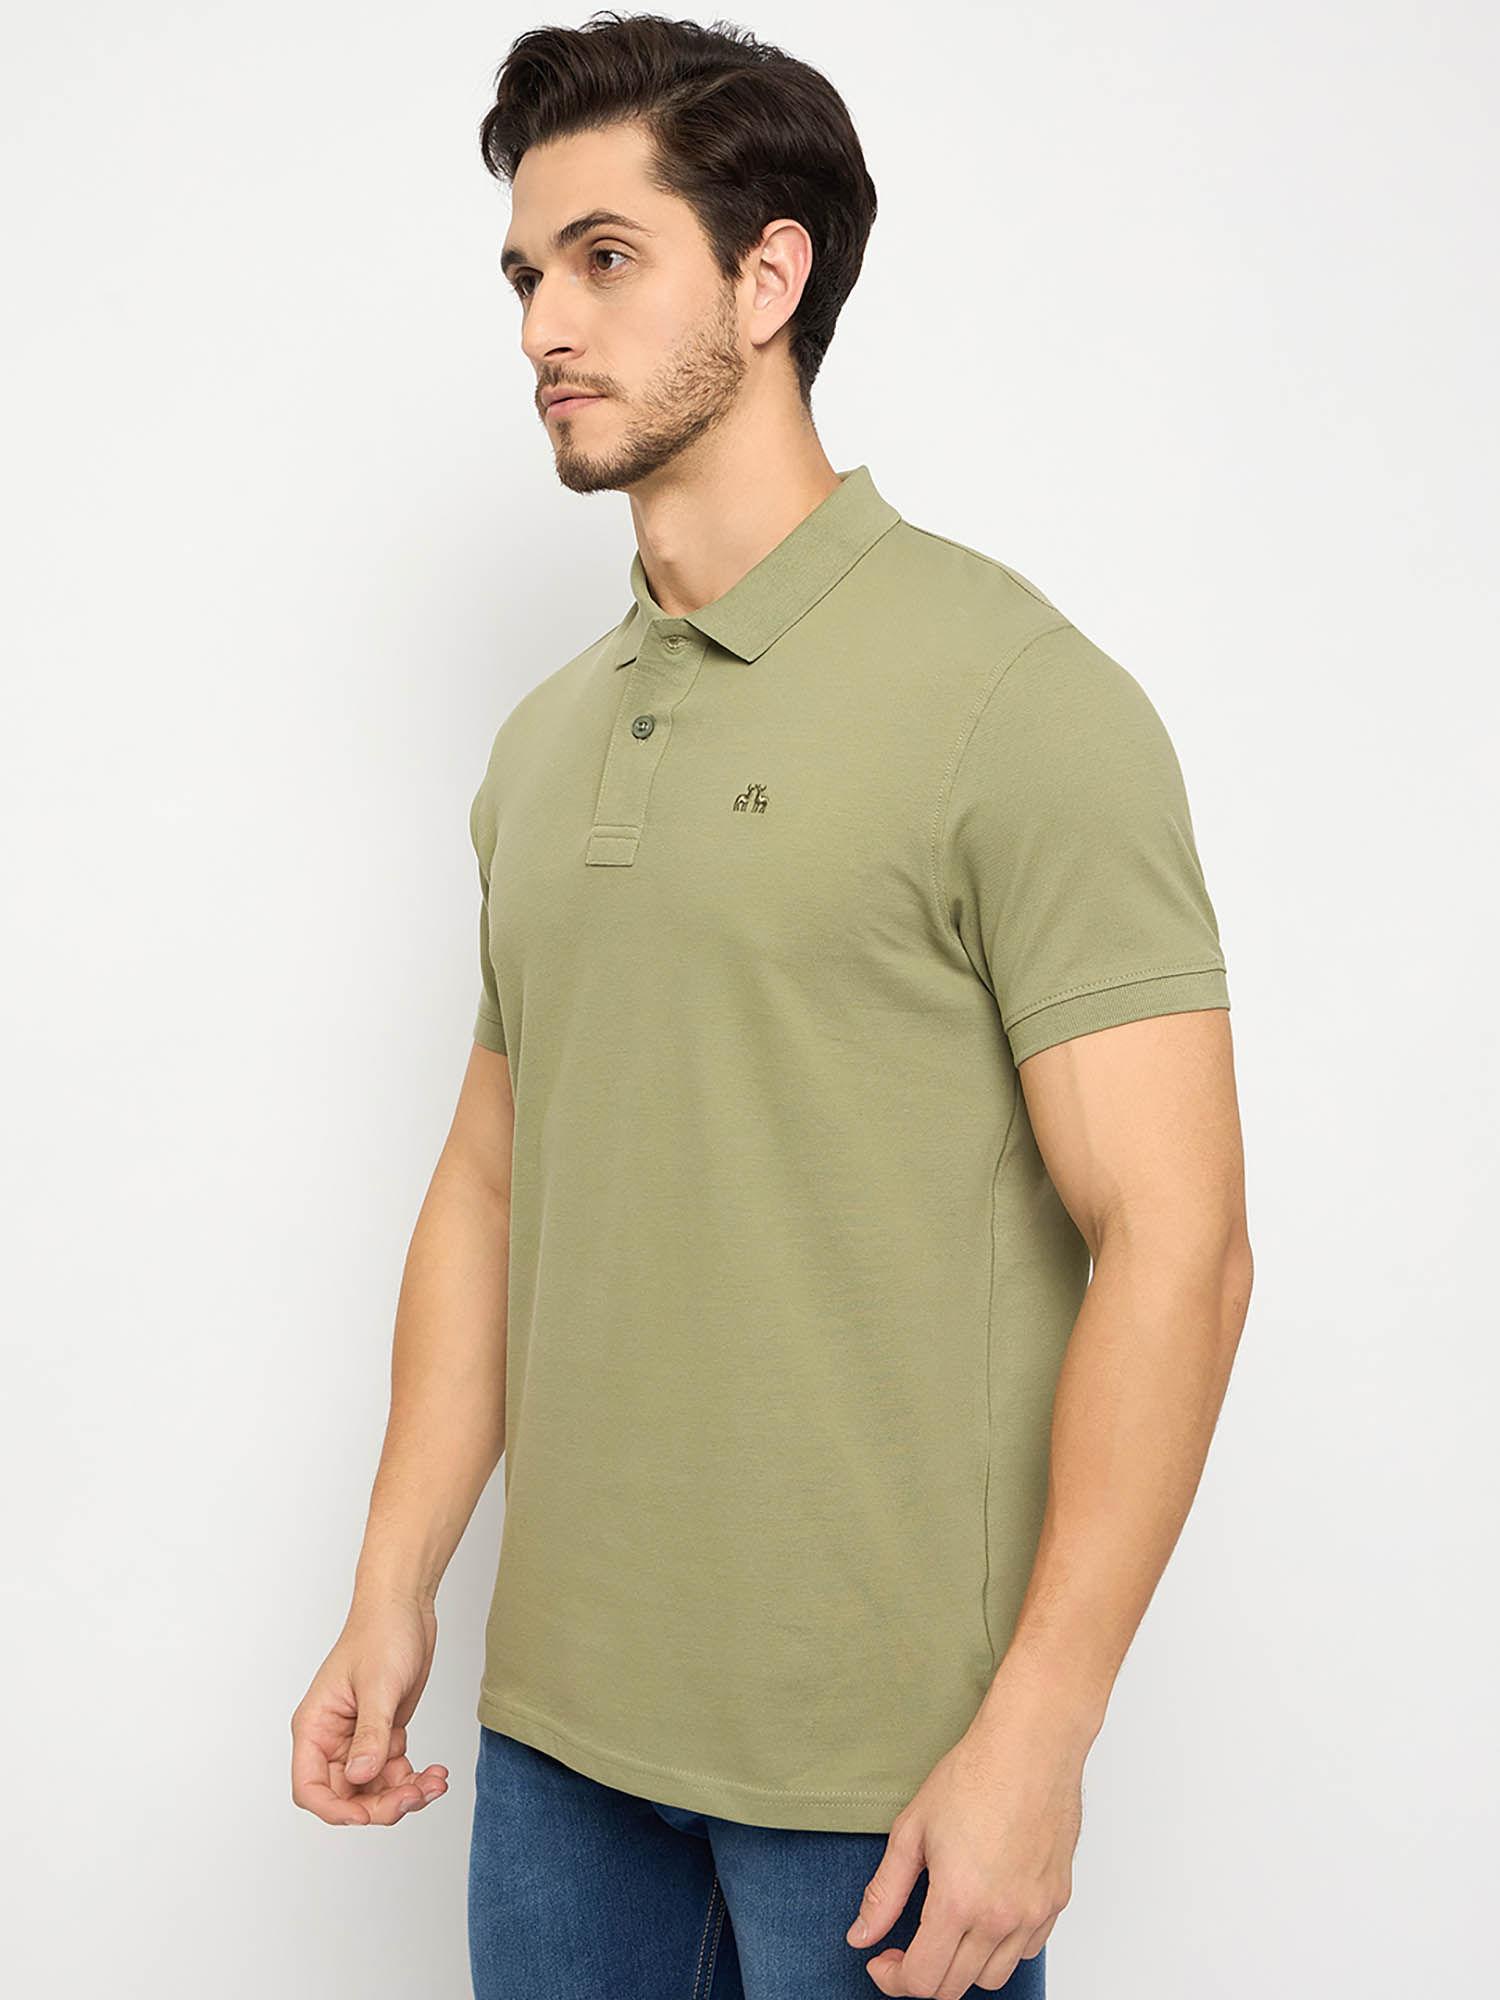 mens half sleeves green polo t-shirt